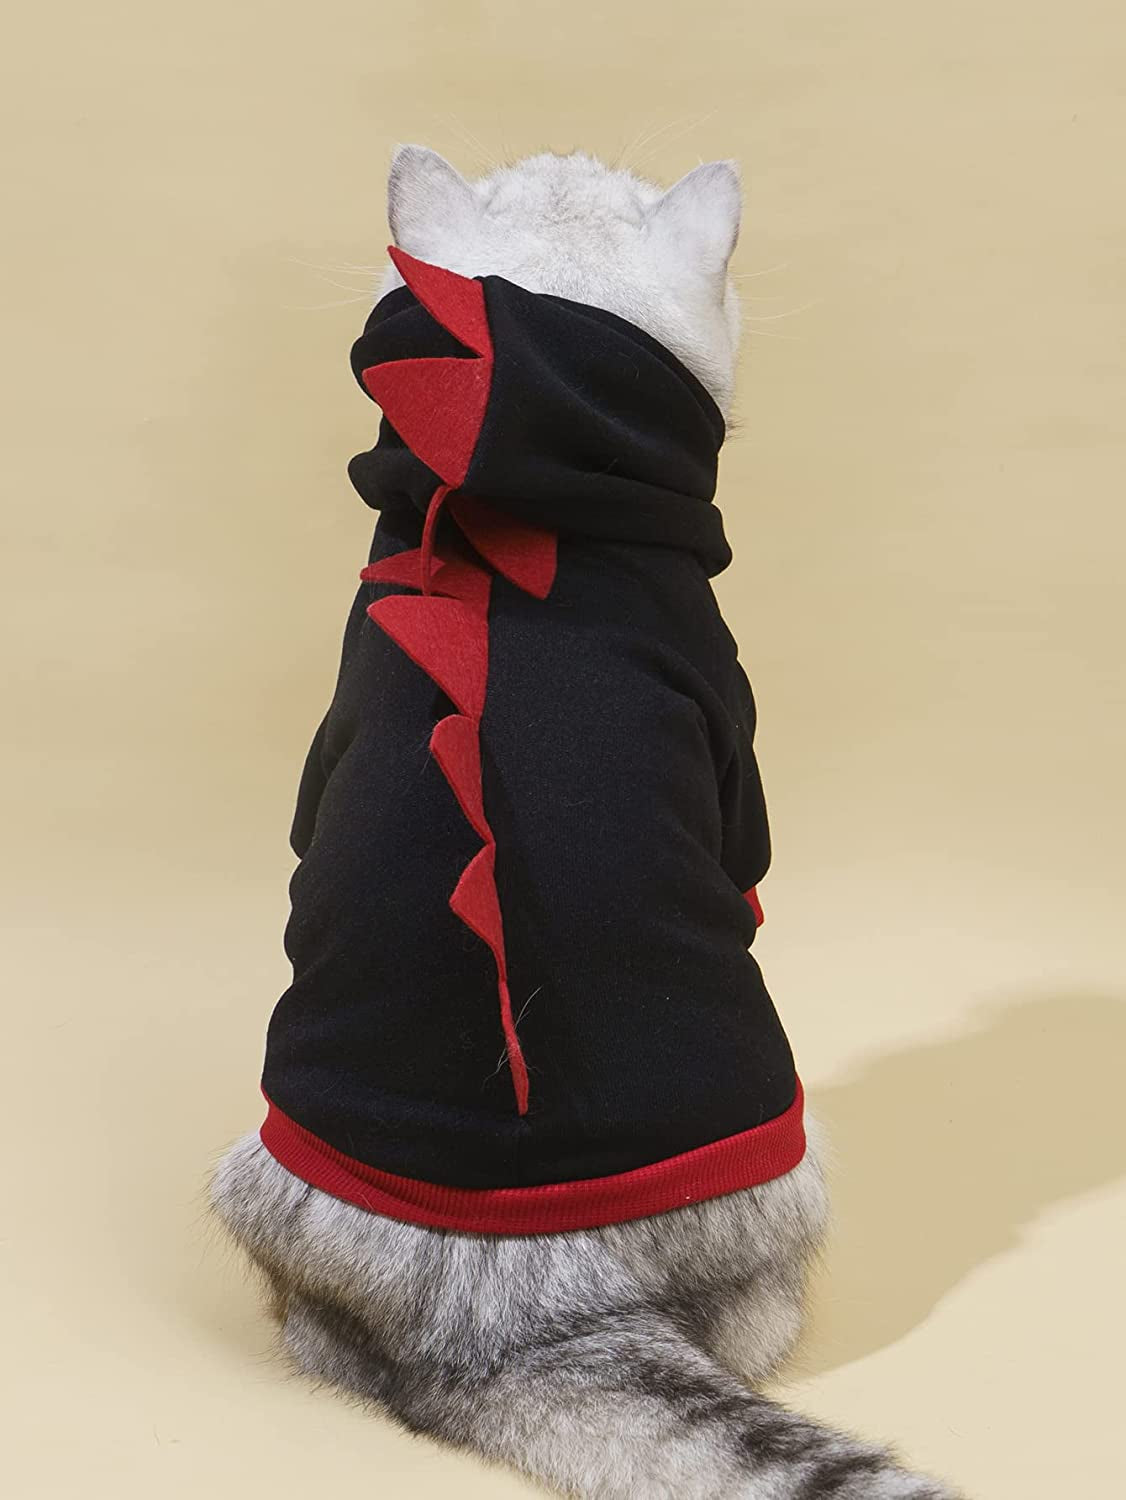 QWINEE Dinosaur Dog Hoodie Dog Warm Jacket Christmas Halloween Dog Costume Dog Clothes for Puppy Kitten Small Medium Dogs Cats Black S Animals & Pet Supplies > Pet Supplies > Dog Supplies > Dog Apparel QWINEE   